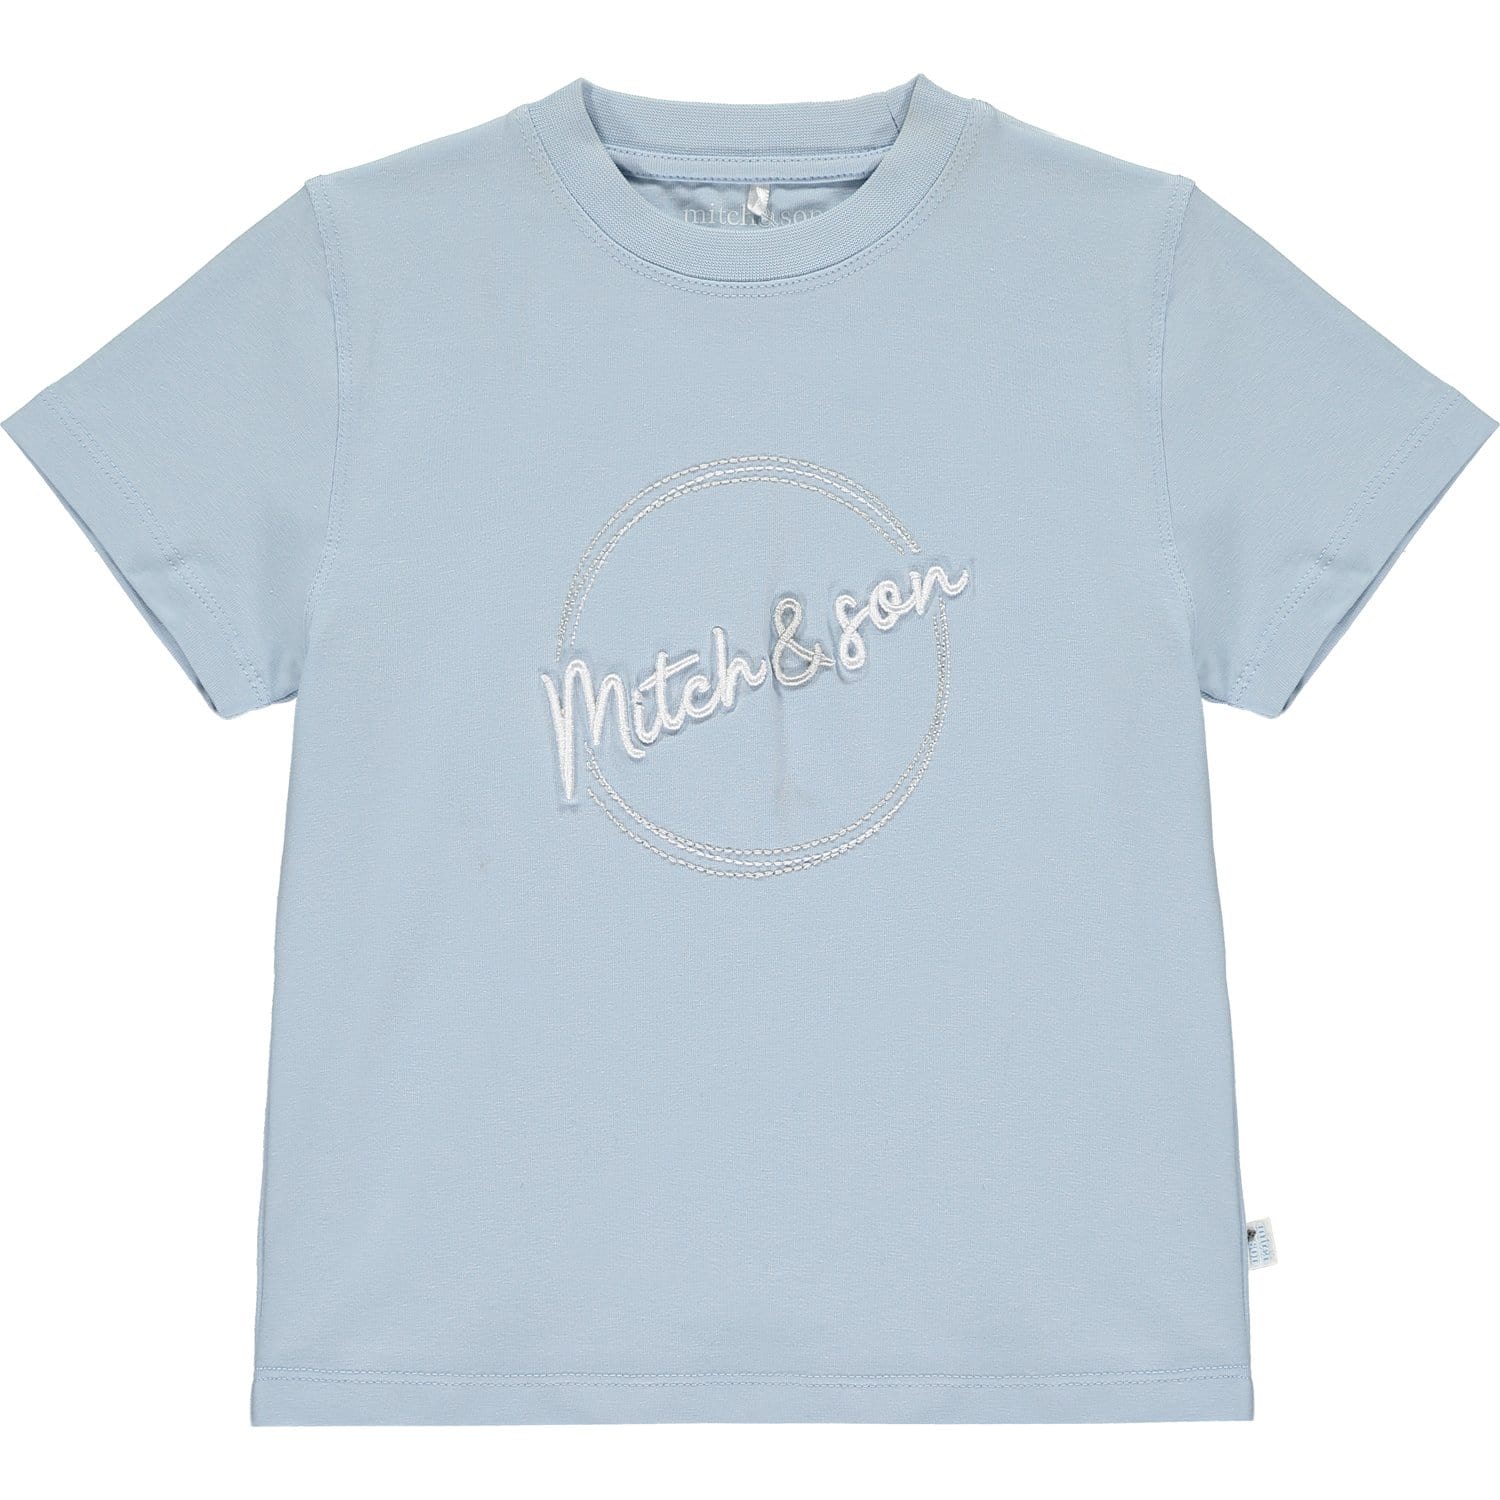 MITCH & SON - Anton Circle Signature Jersey Set - Pale Blue